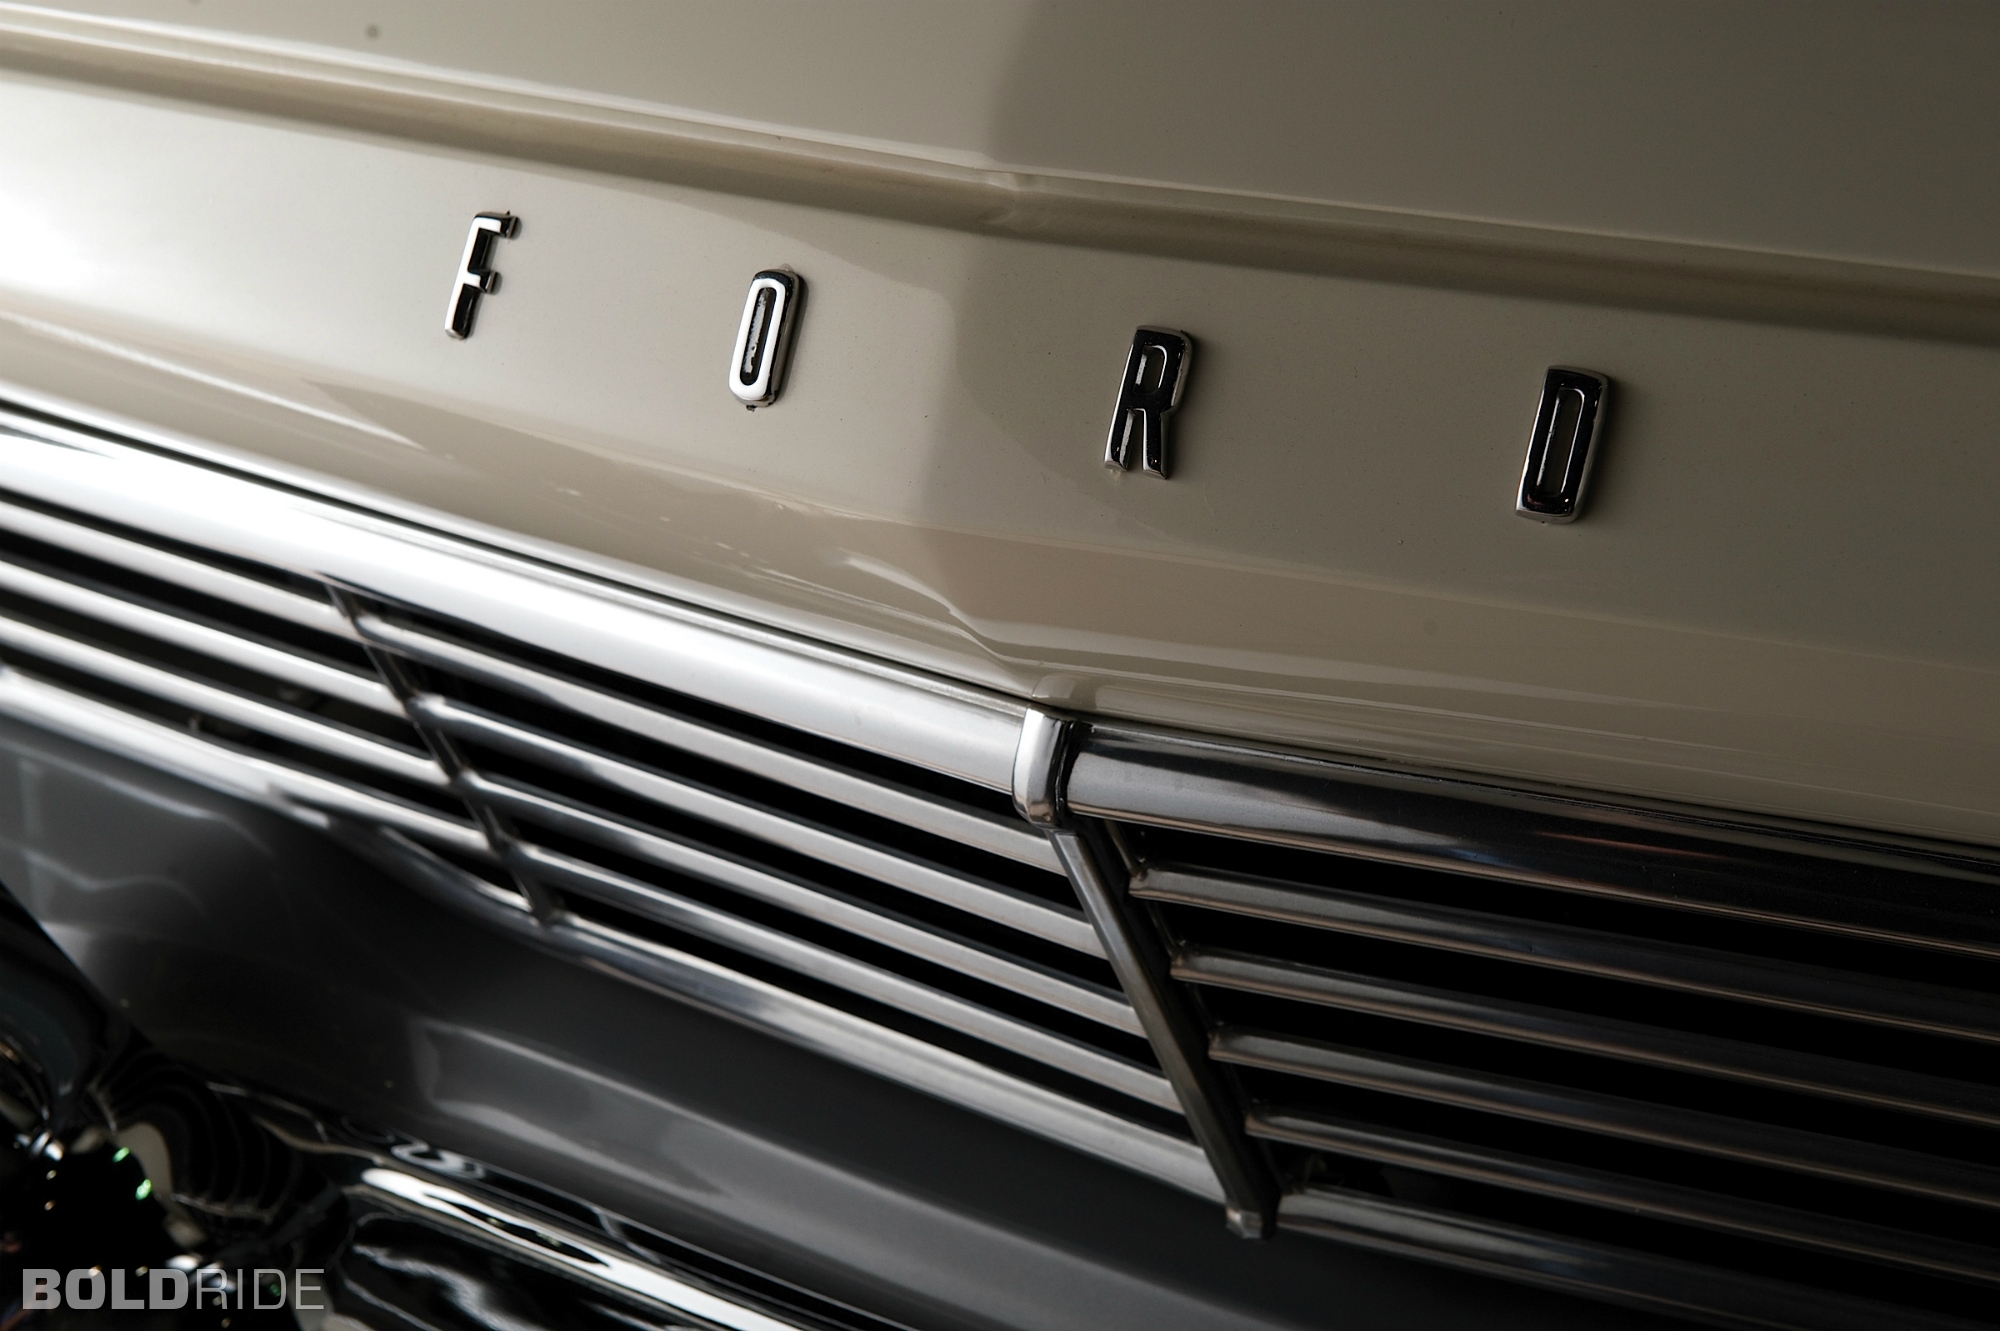 Ford V8 Custom Tudor Sedan